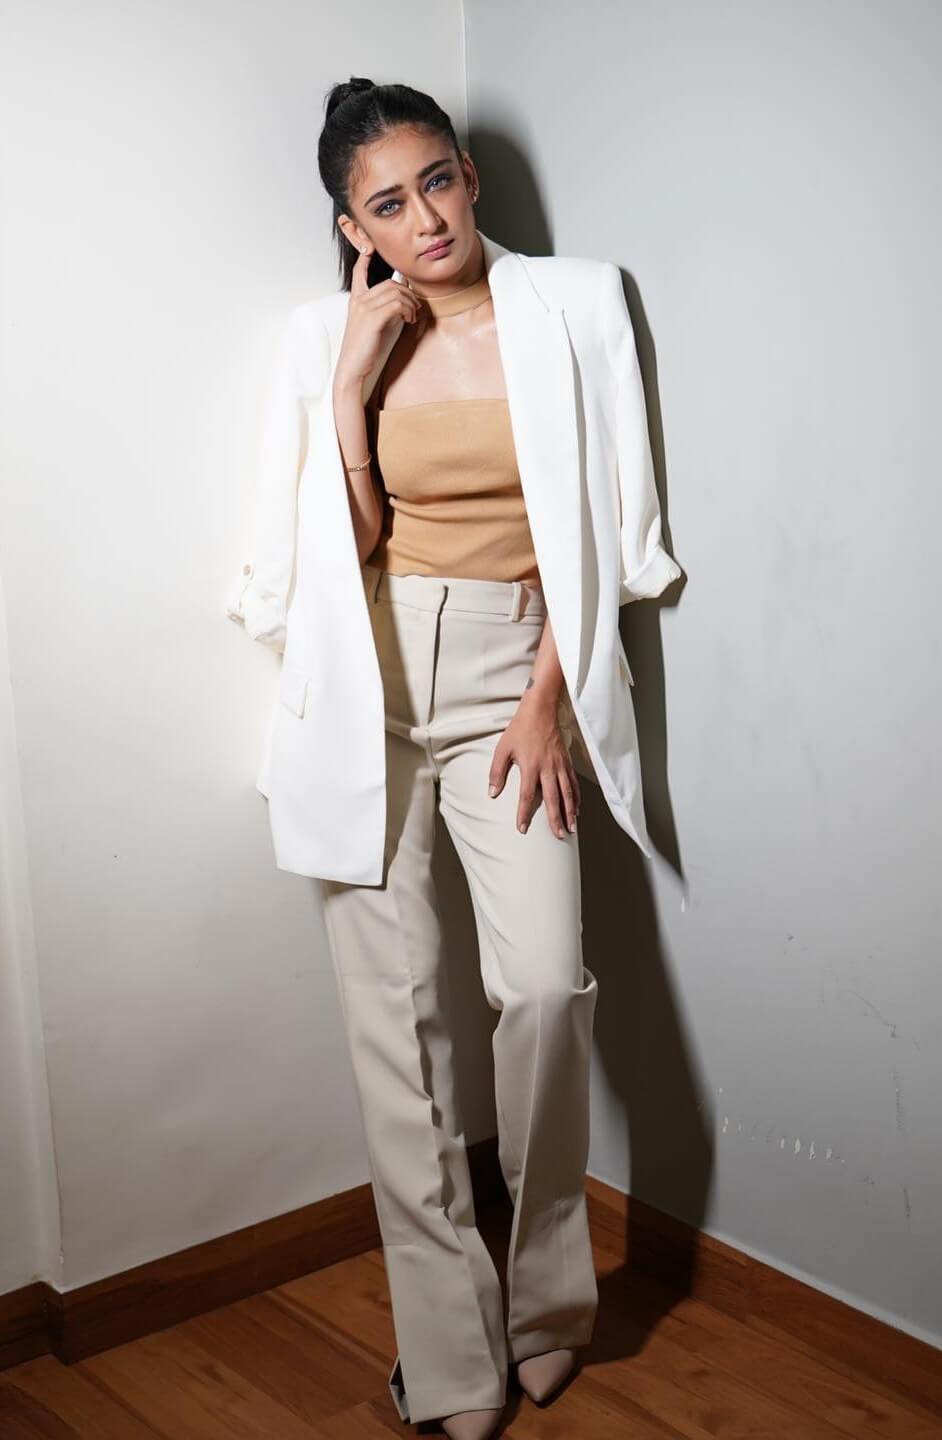 Akshara Haasan Chic & Classy Look In White Suit With Sleek Ponytail